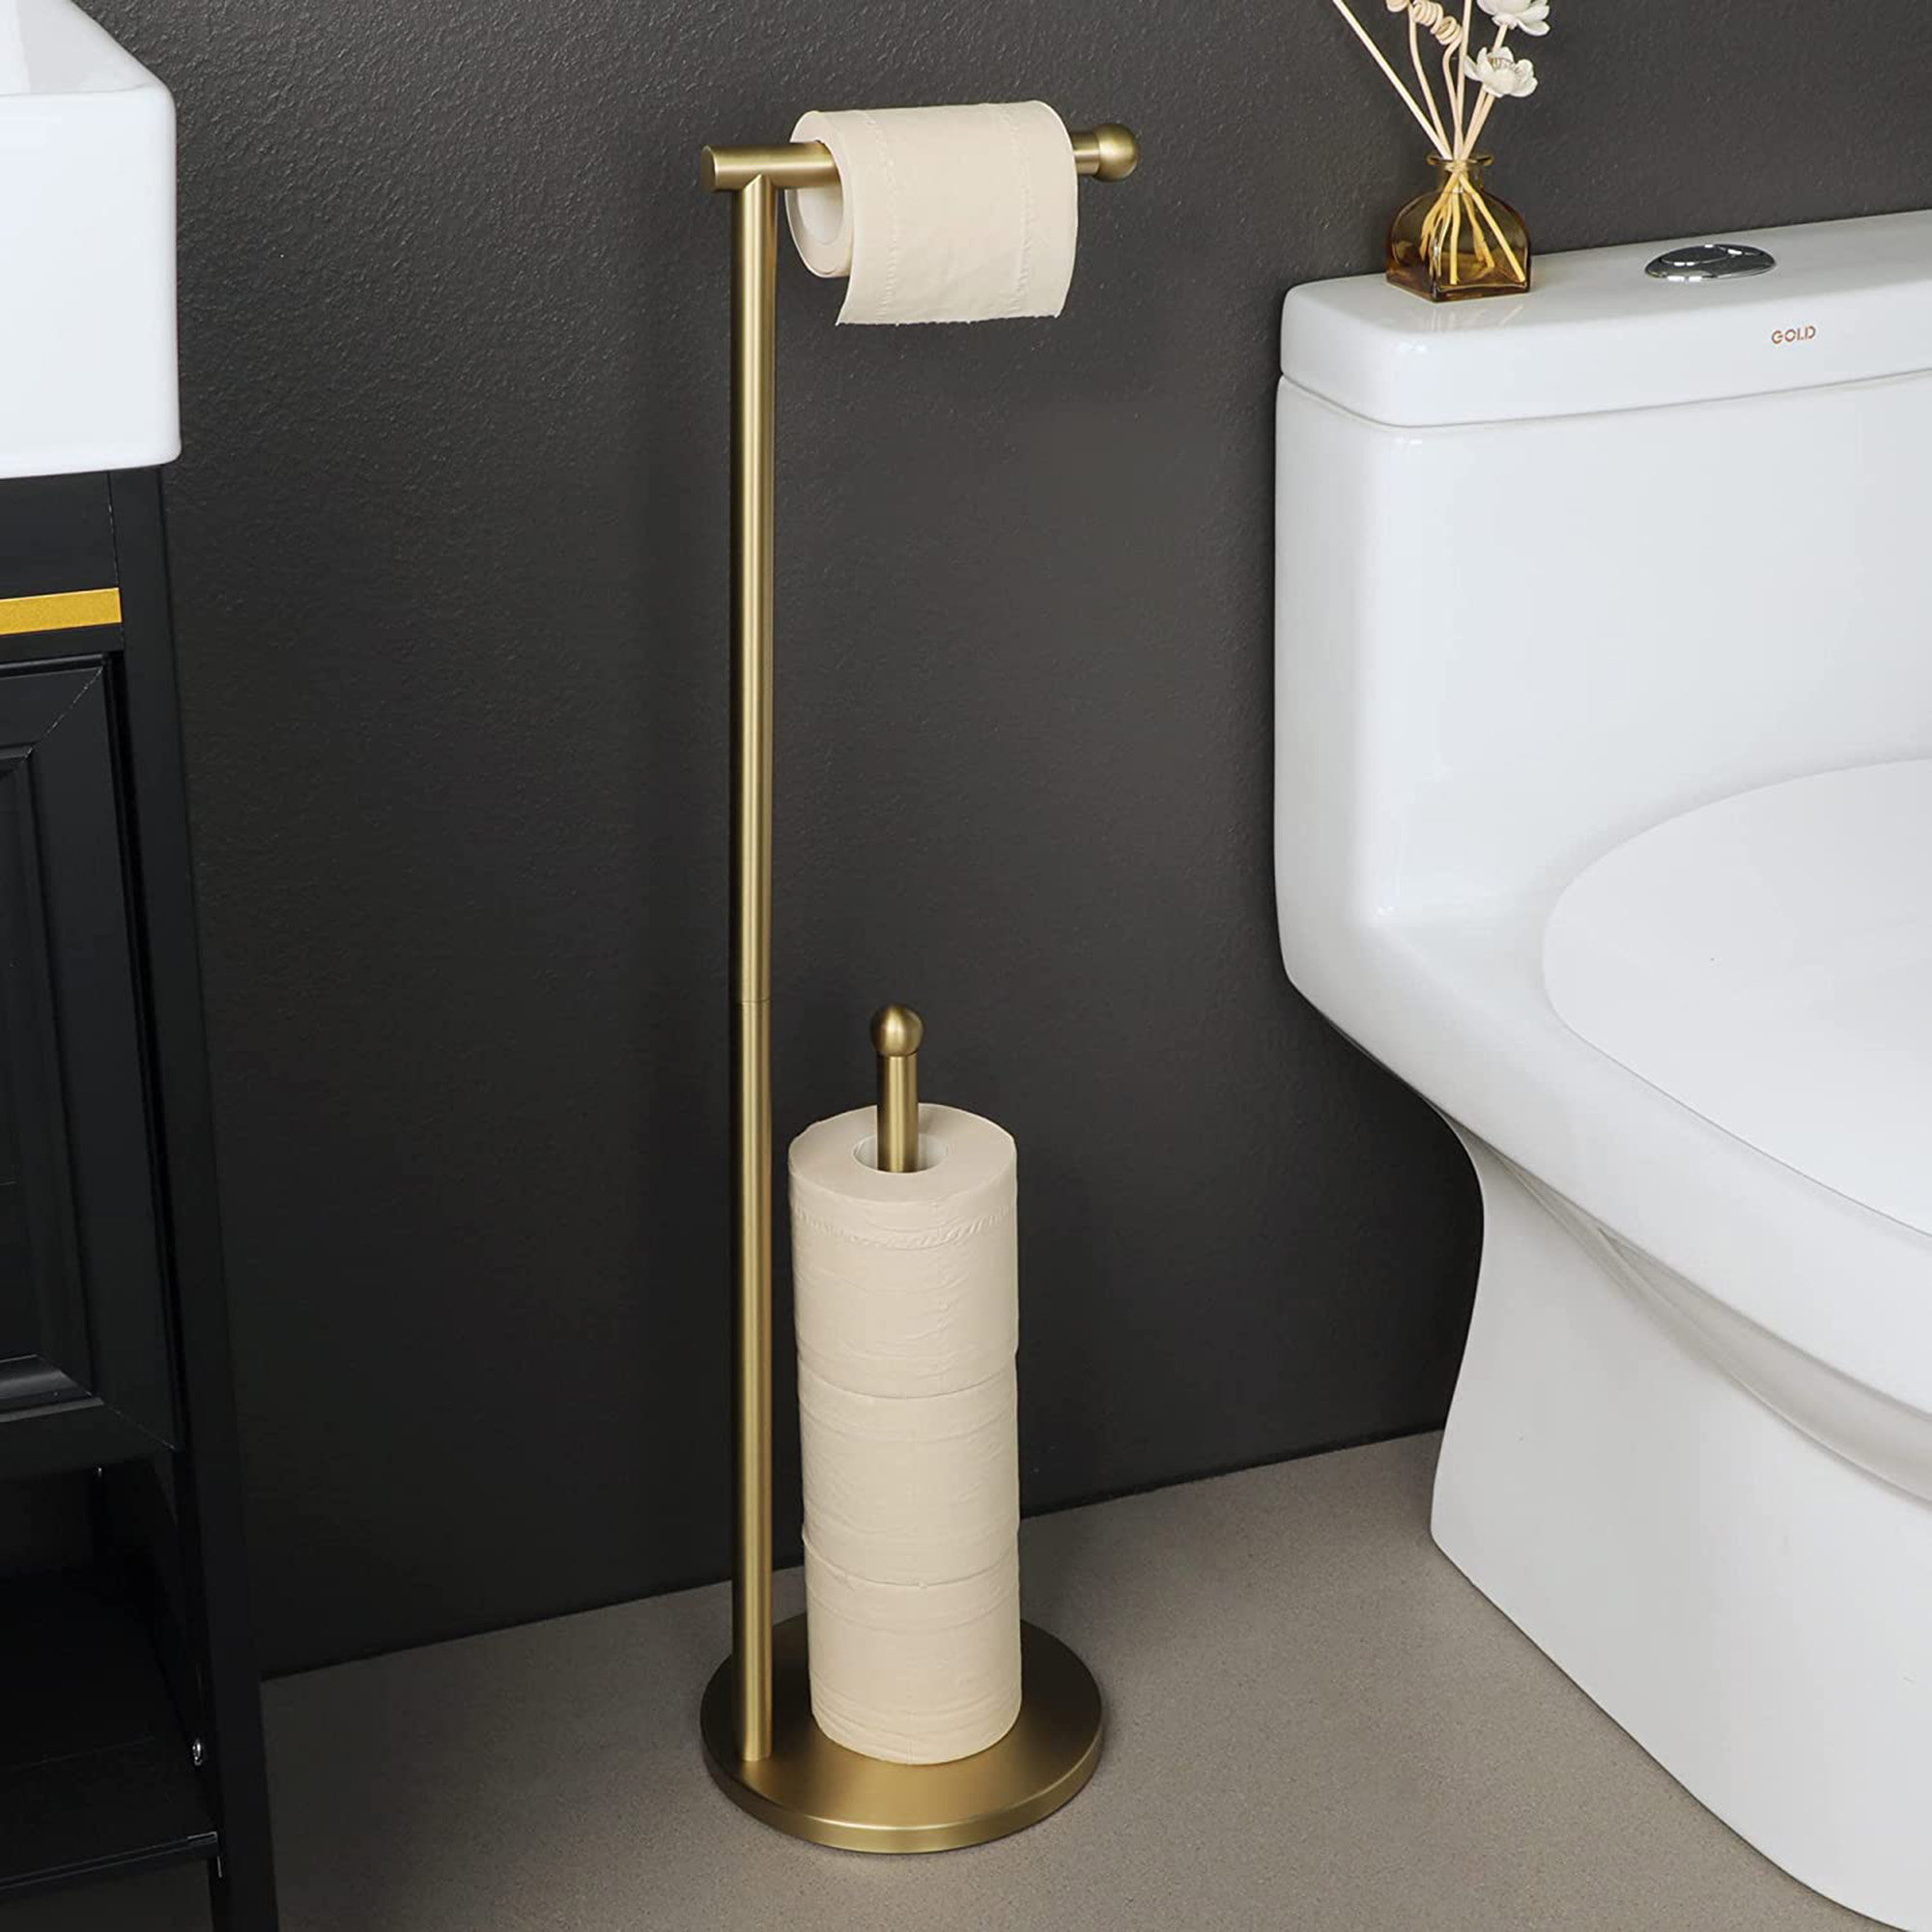 KES Black Toilet Paper Holder Stand Freestanding Toilet Paper Stand for  Bathr